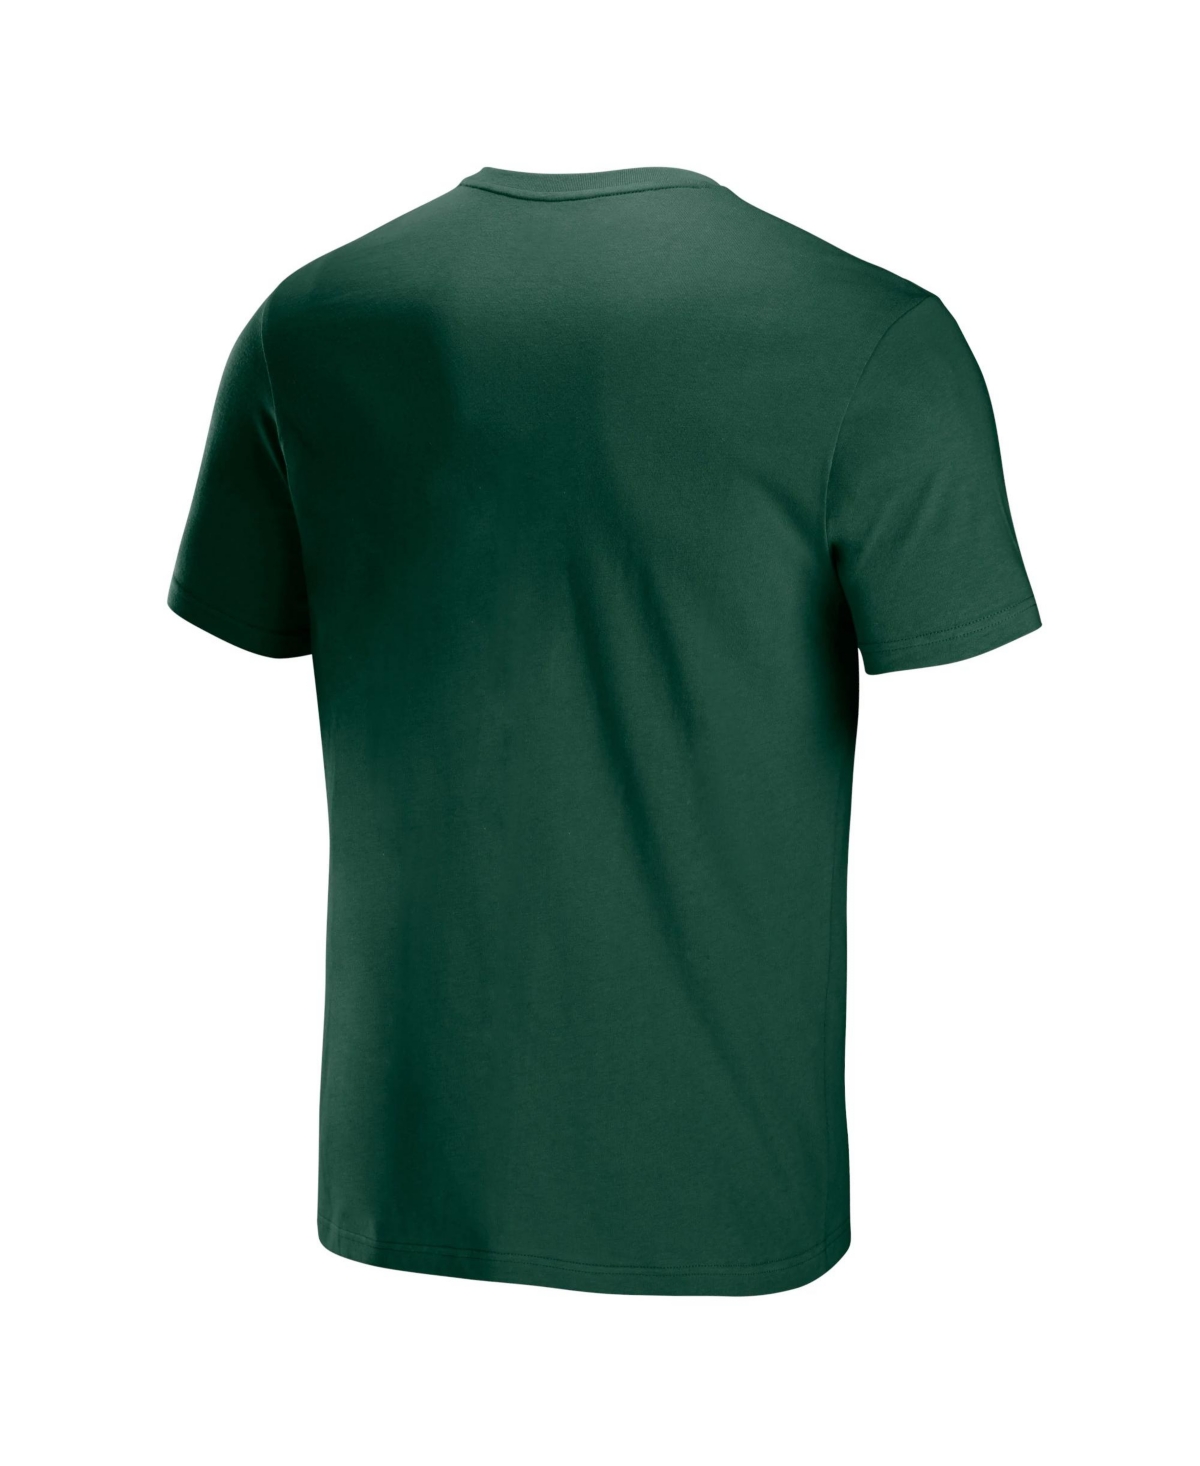 Shop Nfl Properties Men's Nfl X Staple Hunter Green Green Bay Packers Lockup Logo Short Sleeve T-shirt